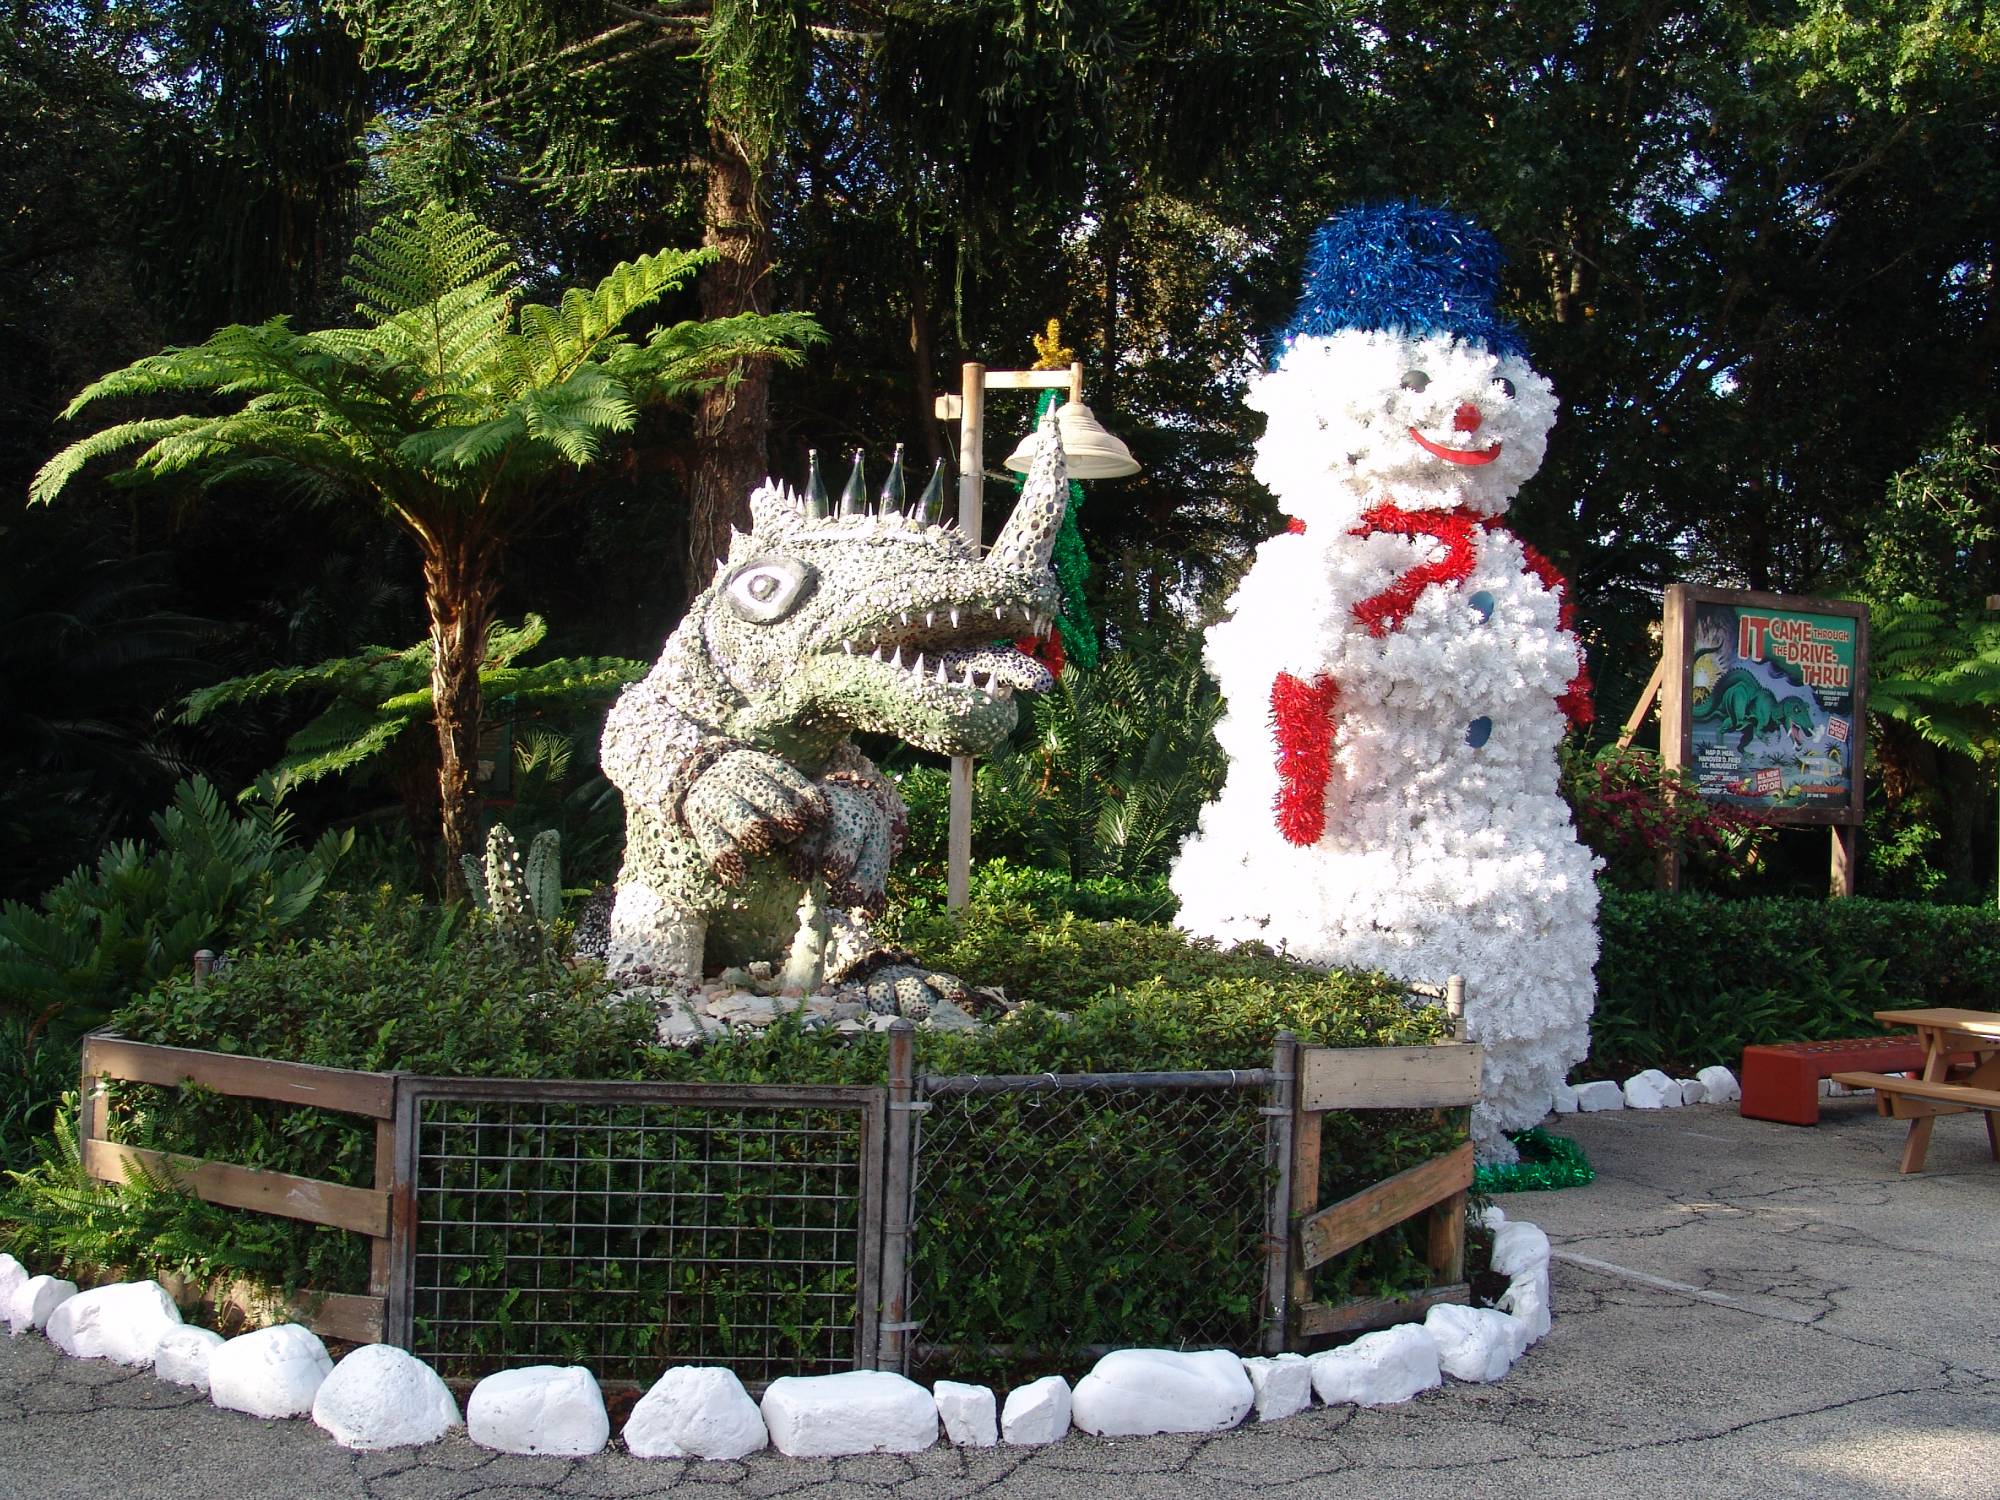 Animal Kingdom - DinoLand USA holiday decorations